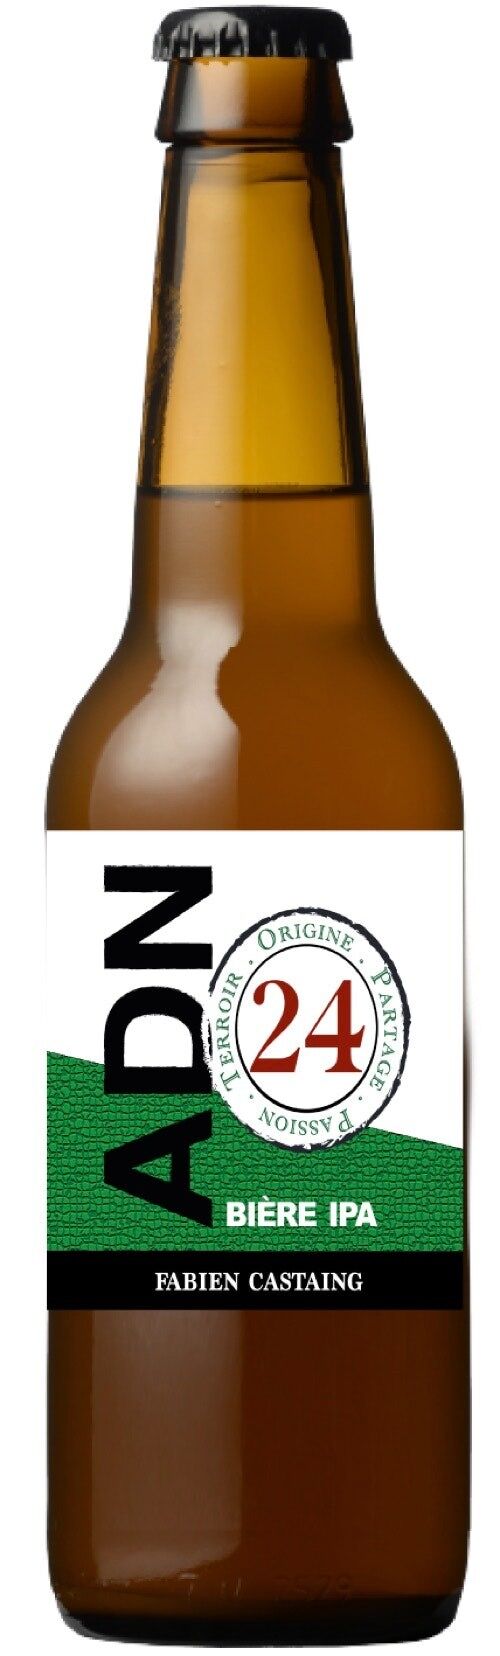 Bière IPA ADN 24 - 33cl